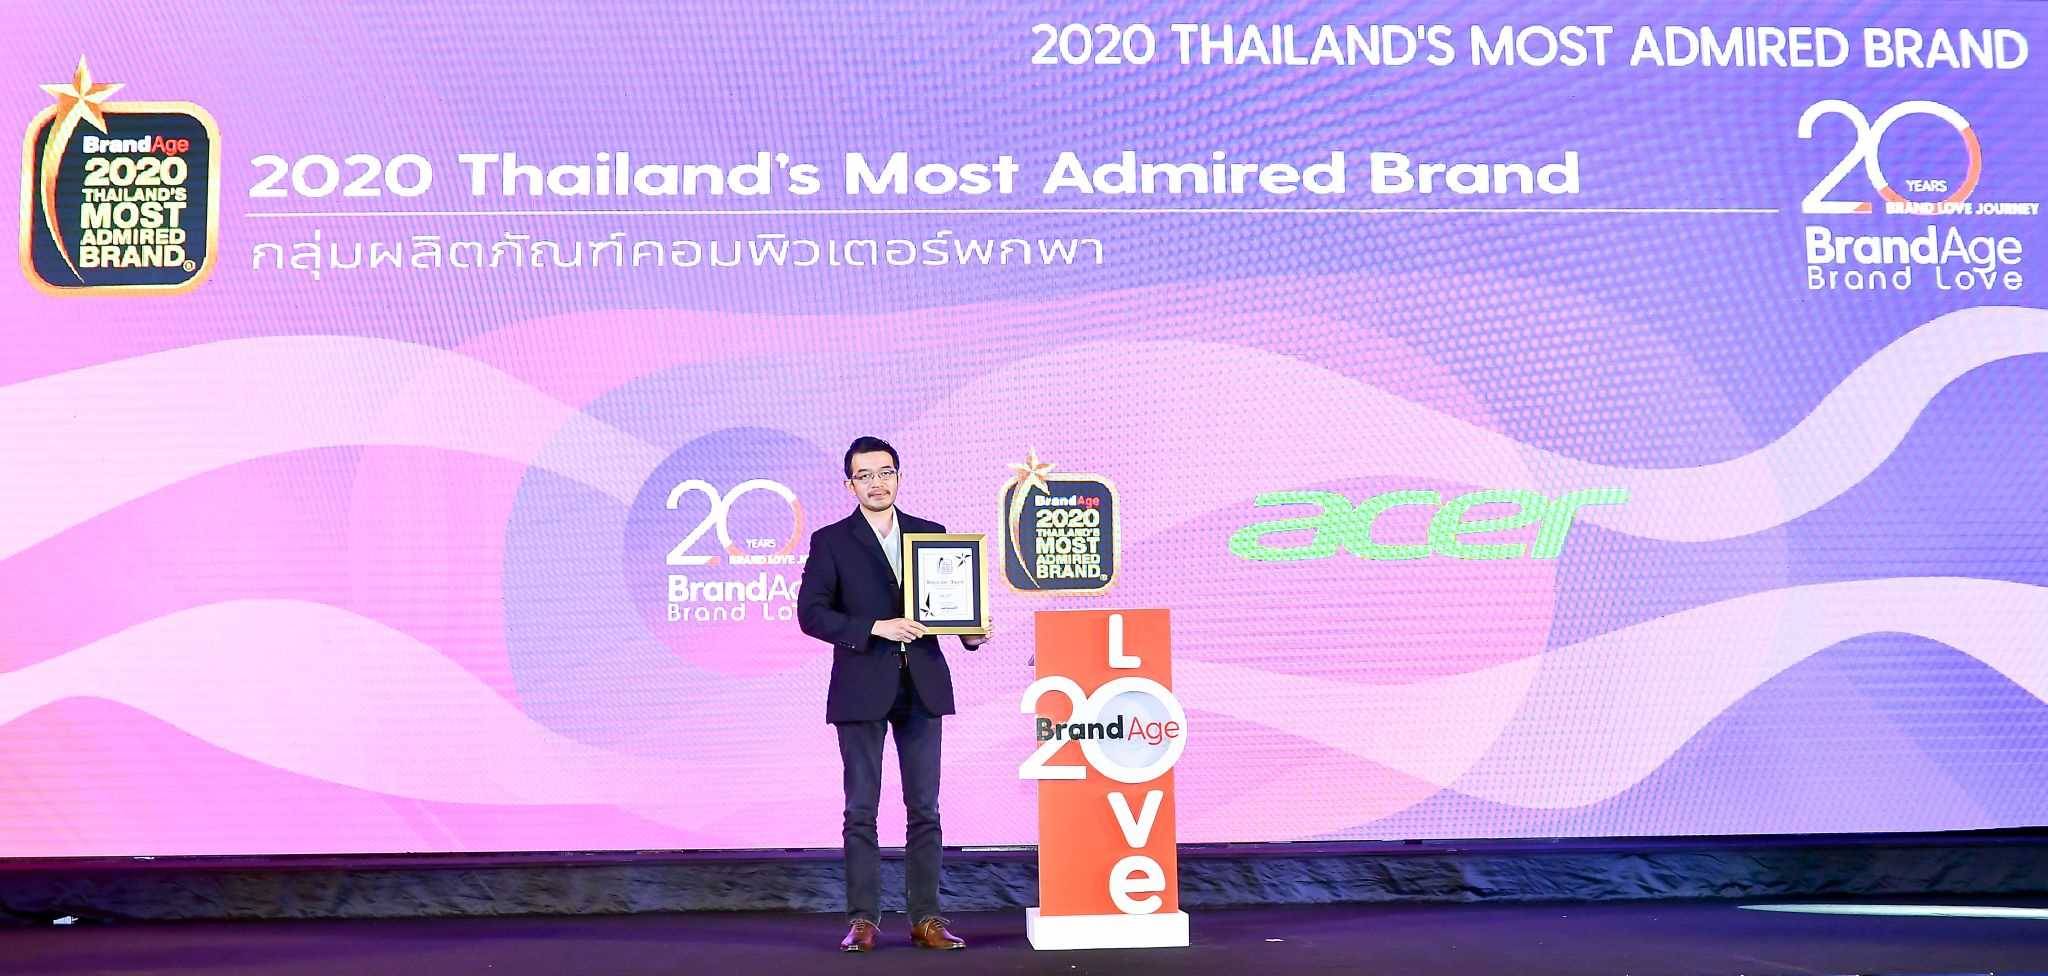 brandage 17 re ที่สุดของความภาคภูมิใจ เอเซอร์คว้า 2 รางวัลการันตีคุณภาพ Thailand’s Most Admired Brand 2020 ต่อเนื่องเป็นปีที่ 10 และ Thailands Most Admired Company 2019 จากนิตยสารแบรนด์เอจ